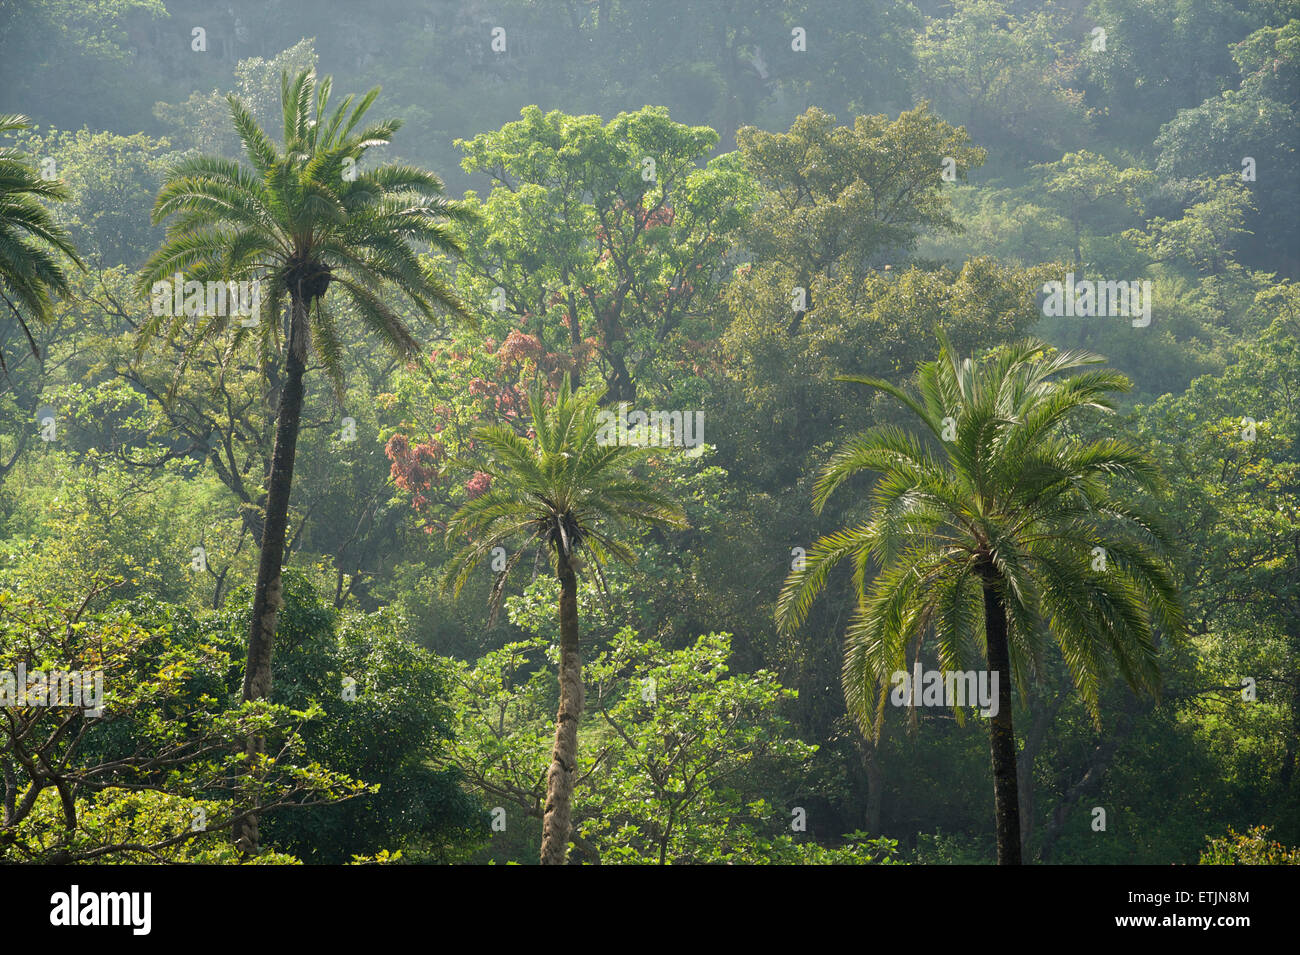 Palm trees and vegetation, Mount Abu, Rajasthan, India Stock Photo